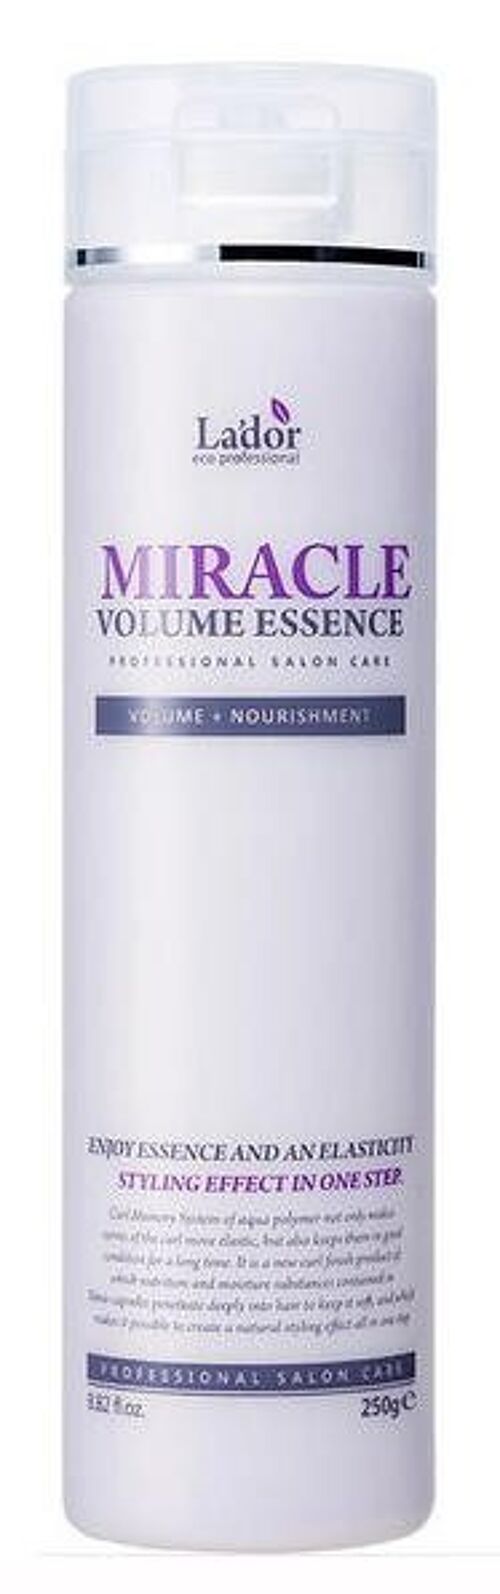 Miracle Volume Essence